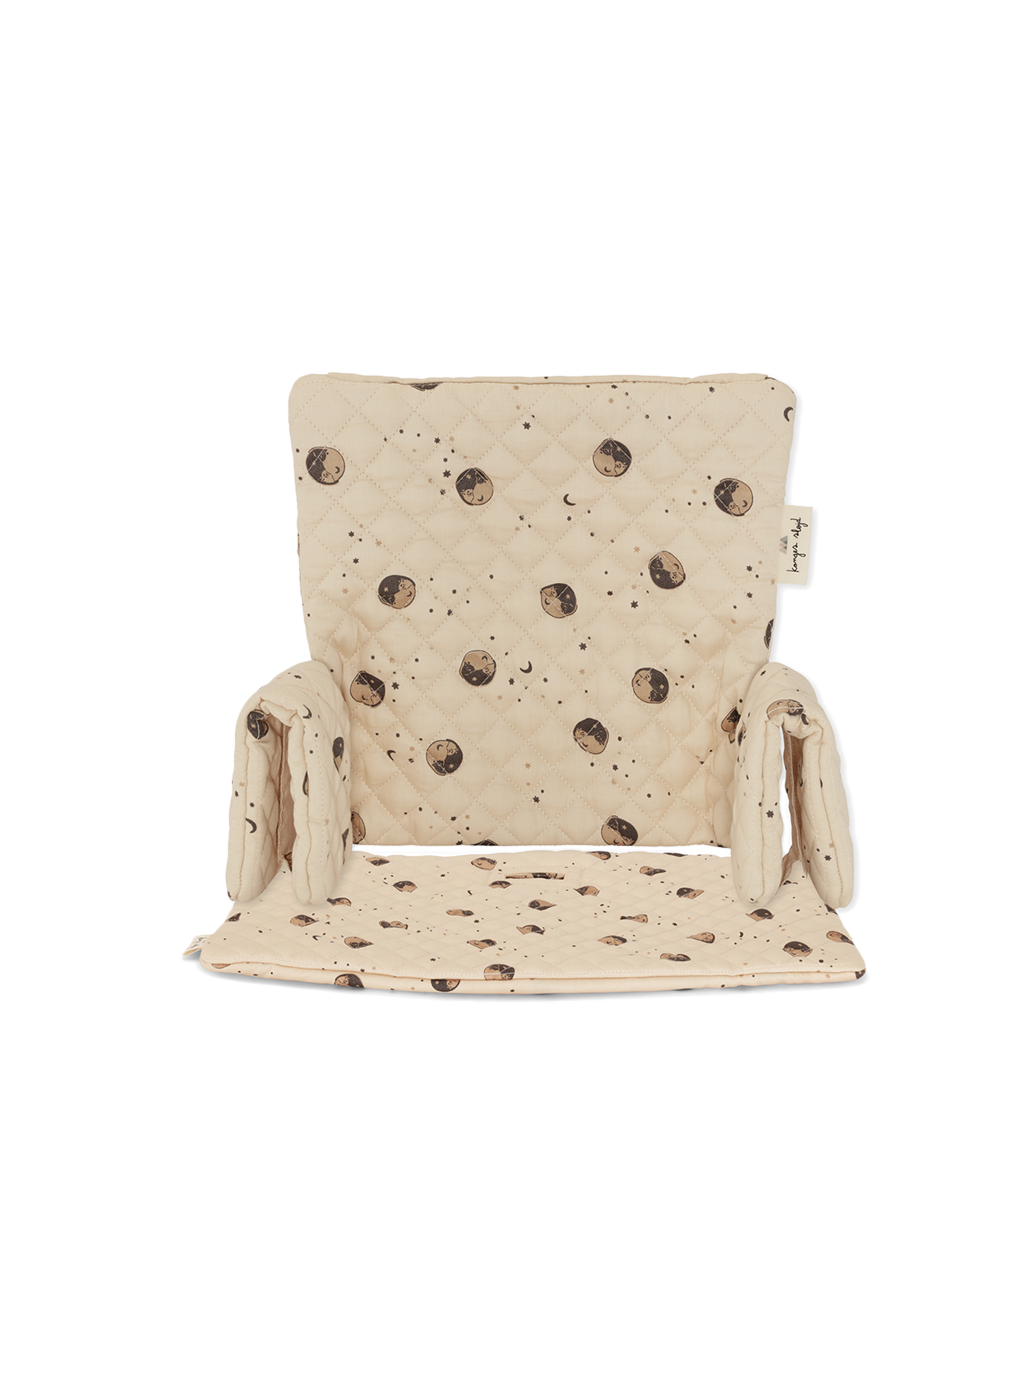 a pillow for a high chair